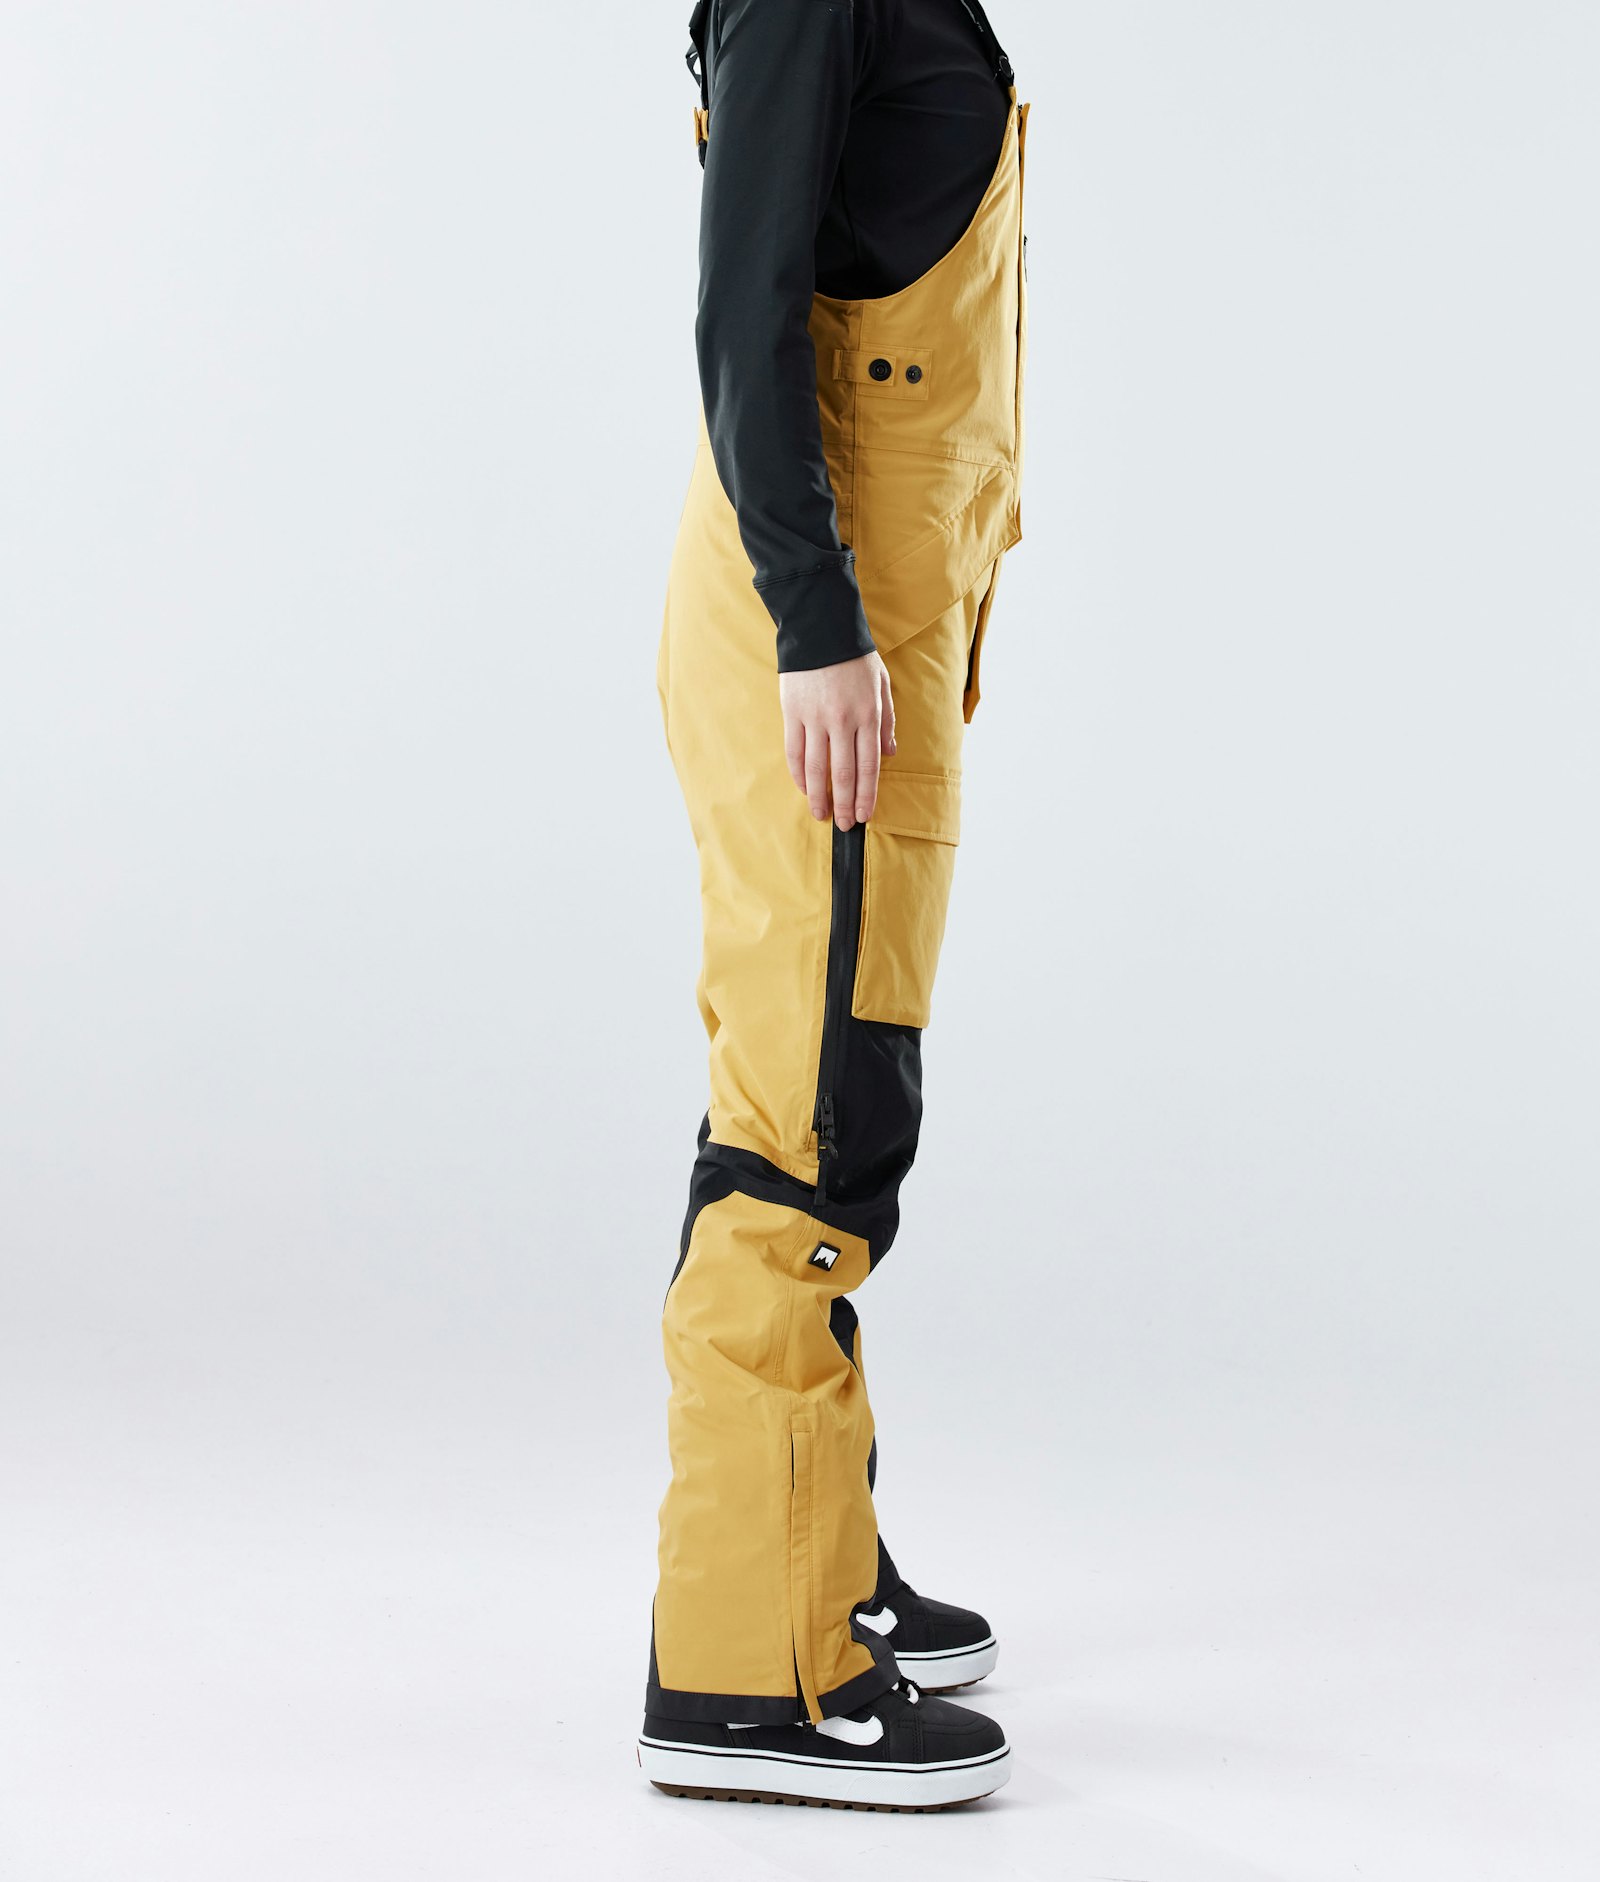 Fawk W 2020 Pantaloni Snowboard Donna Yellow/Black